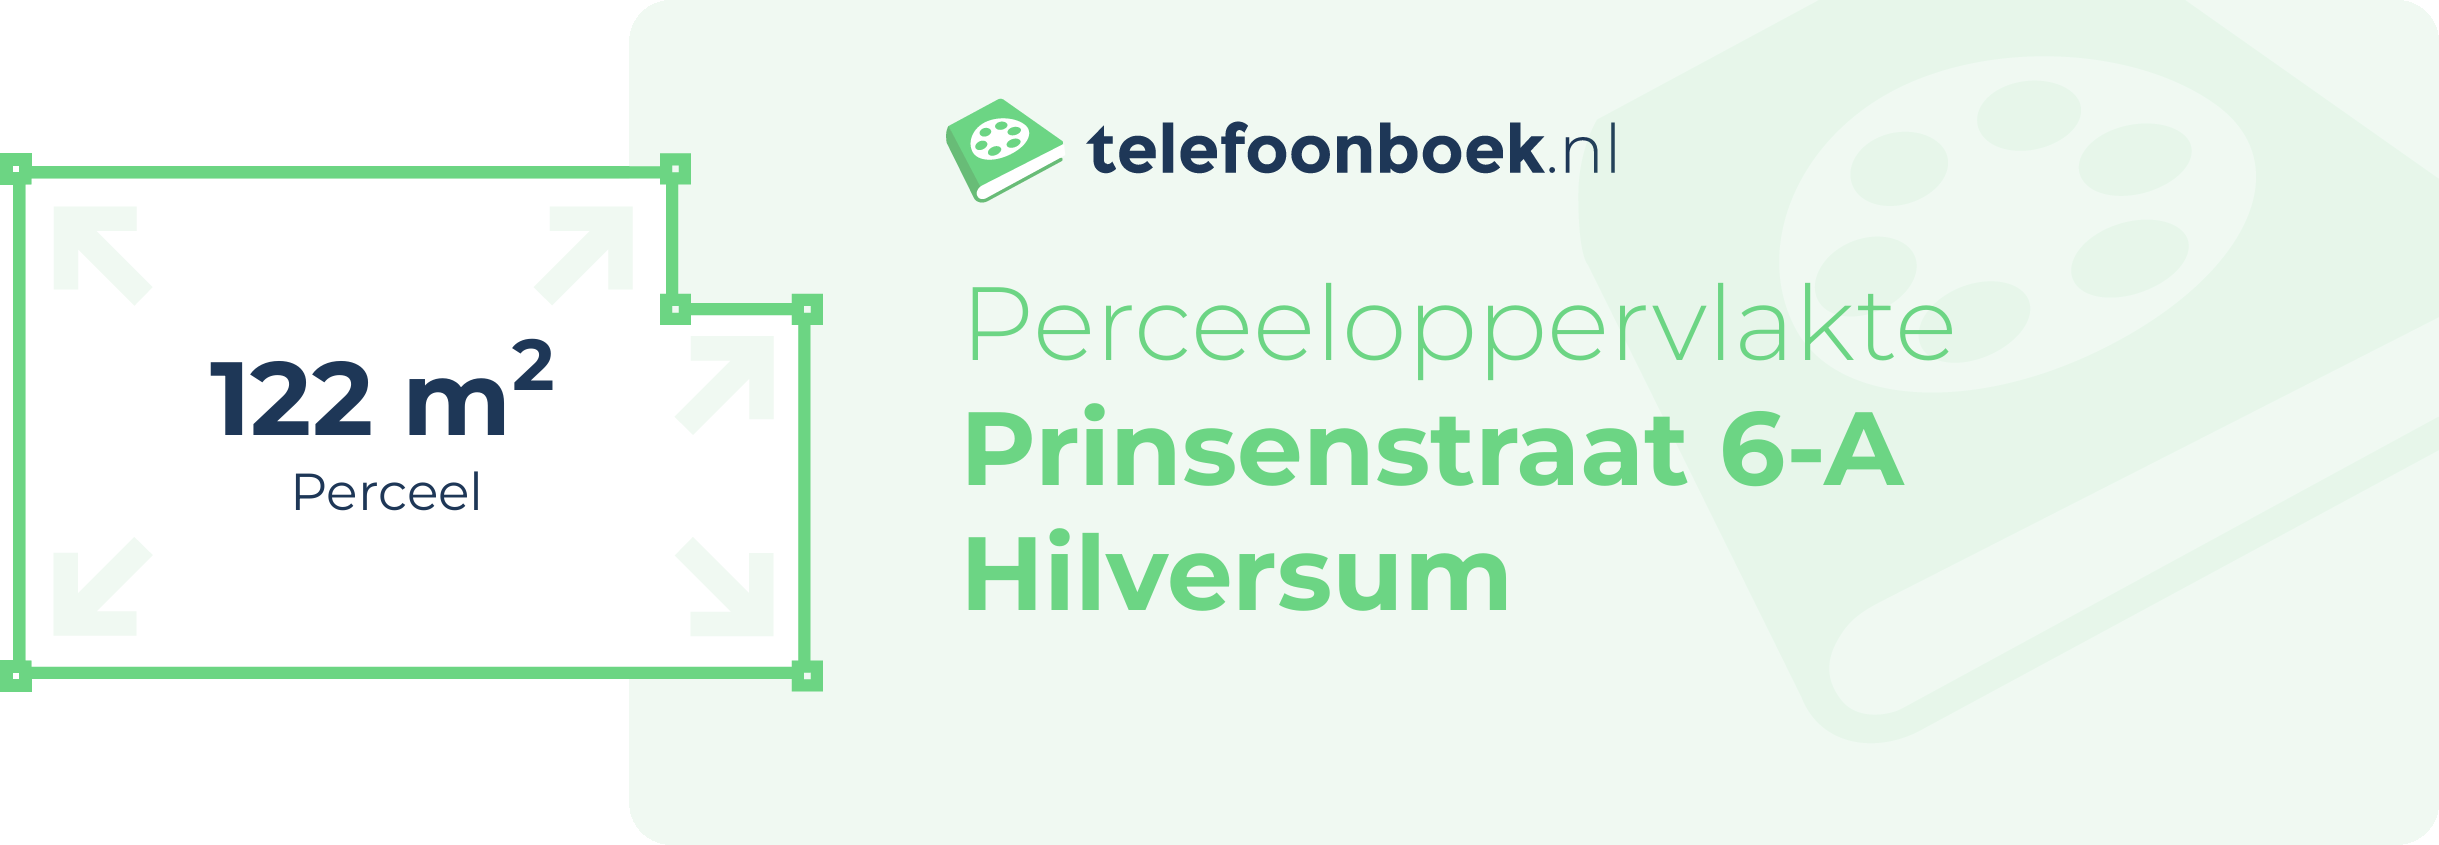 Perceeloppervlakte Prinsenstraat 6-A Hilversum